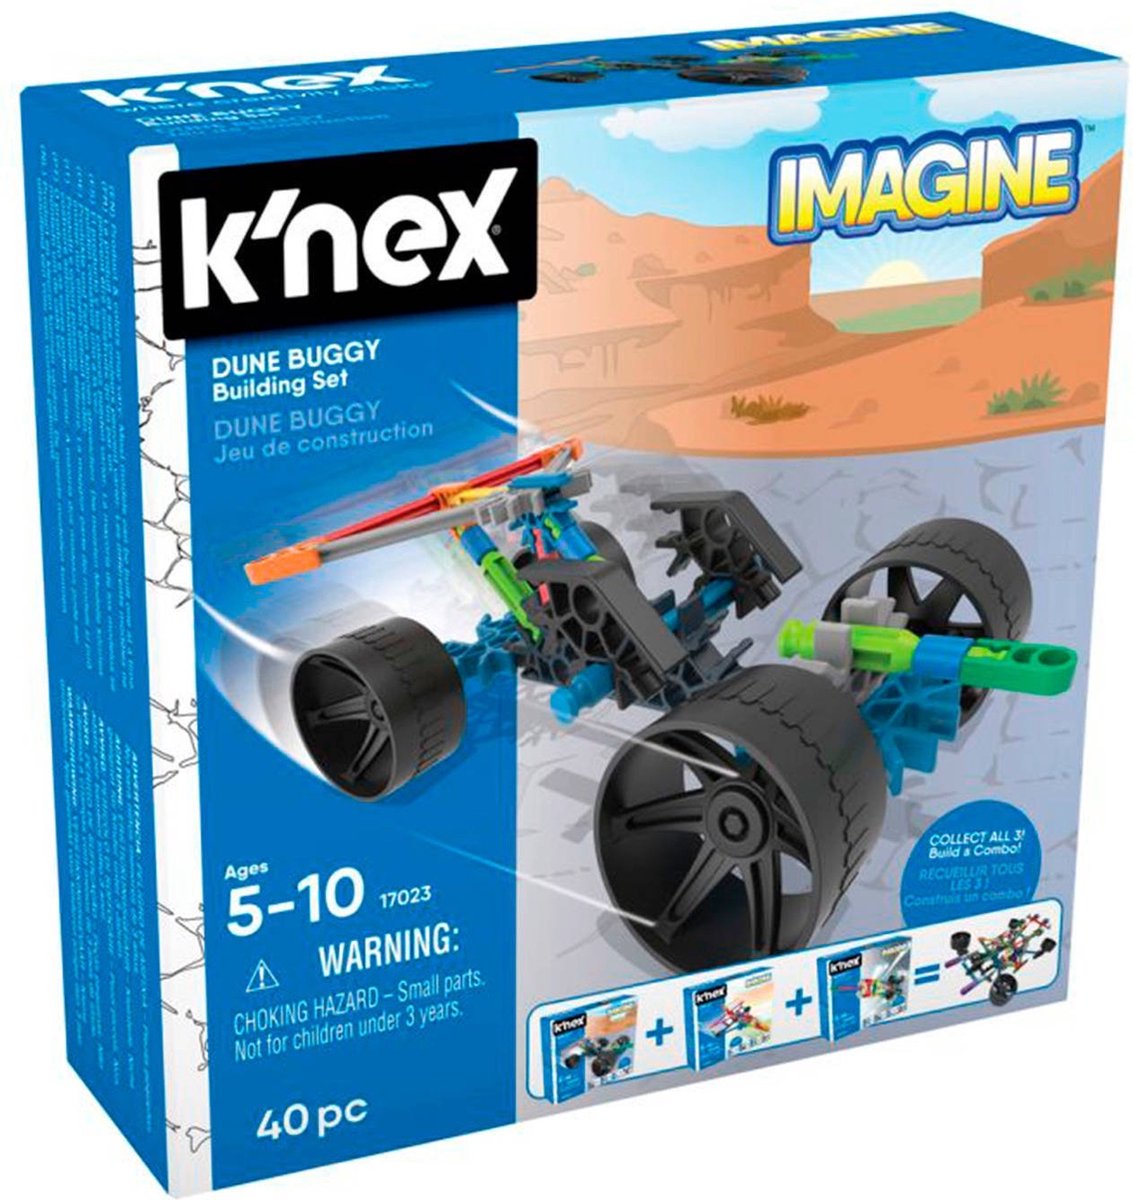 knex dune buggy building set